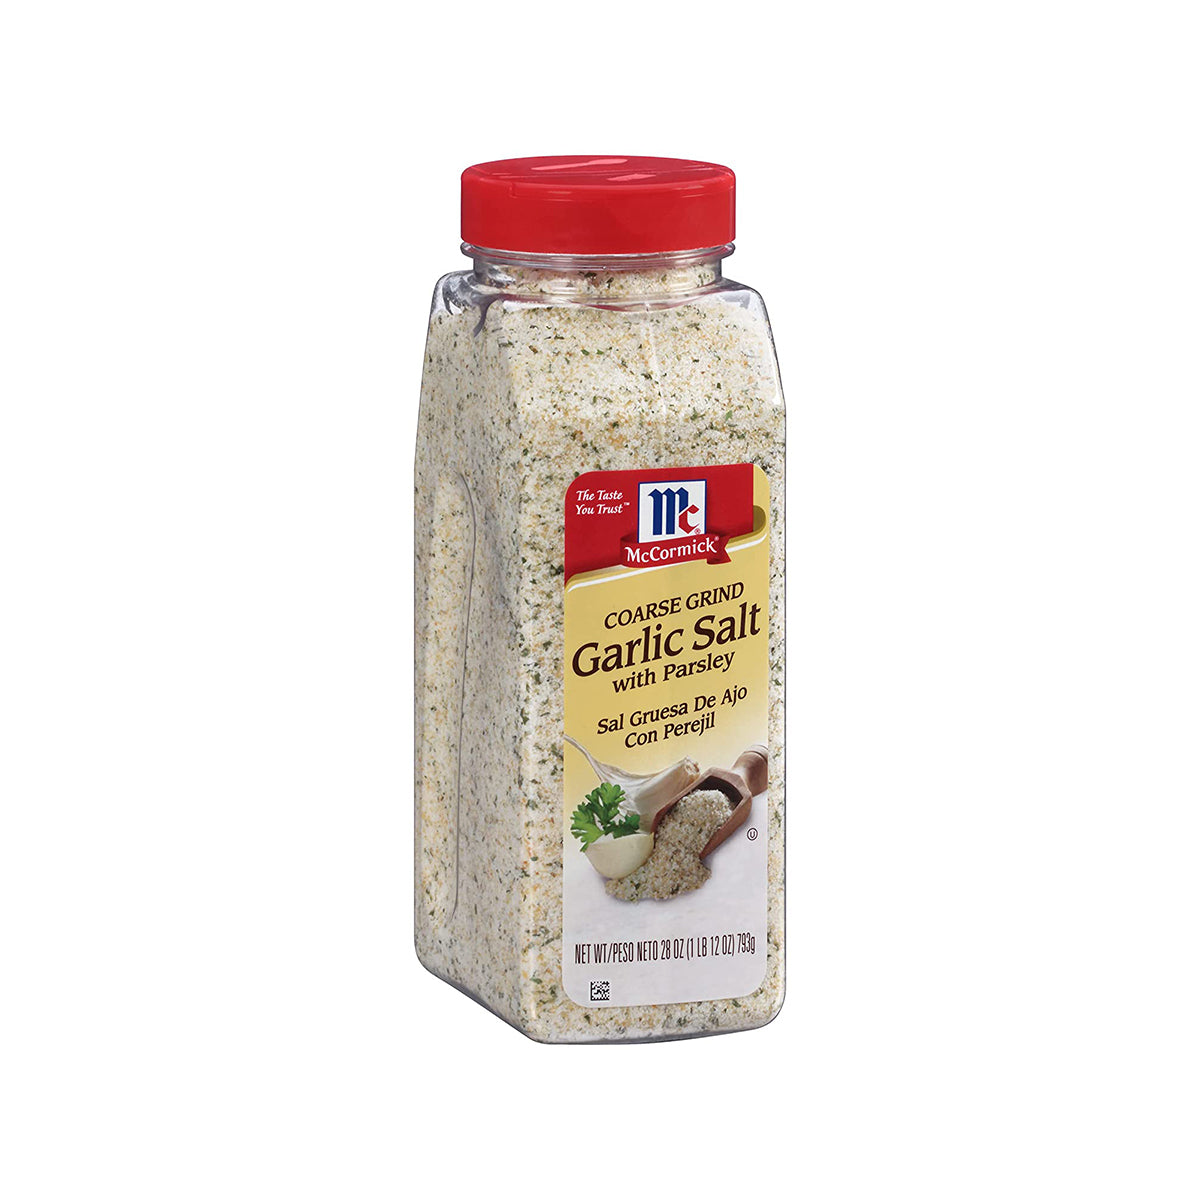 Coarse Grind Garlic Salt With Parsley 793g